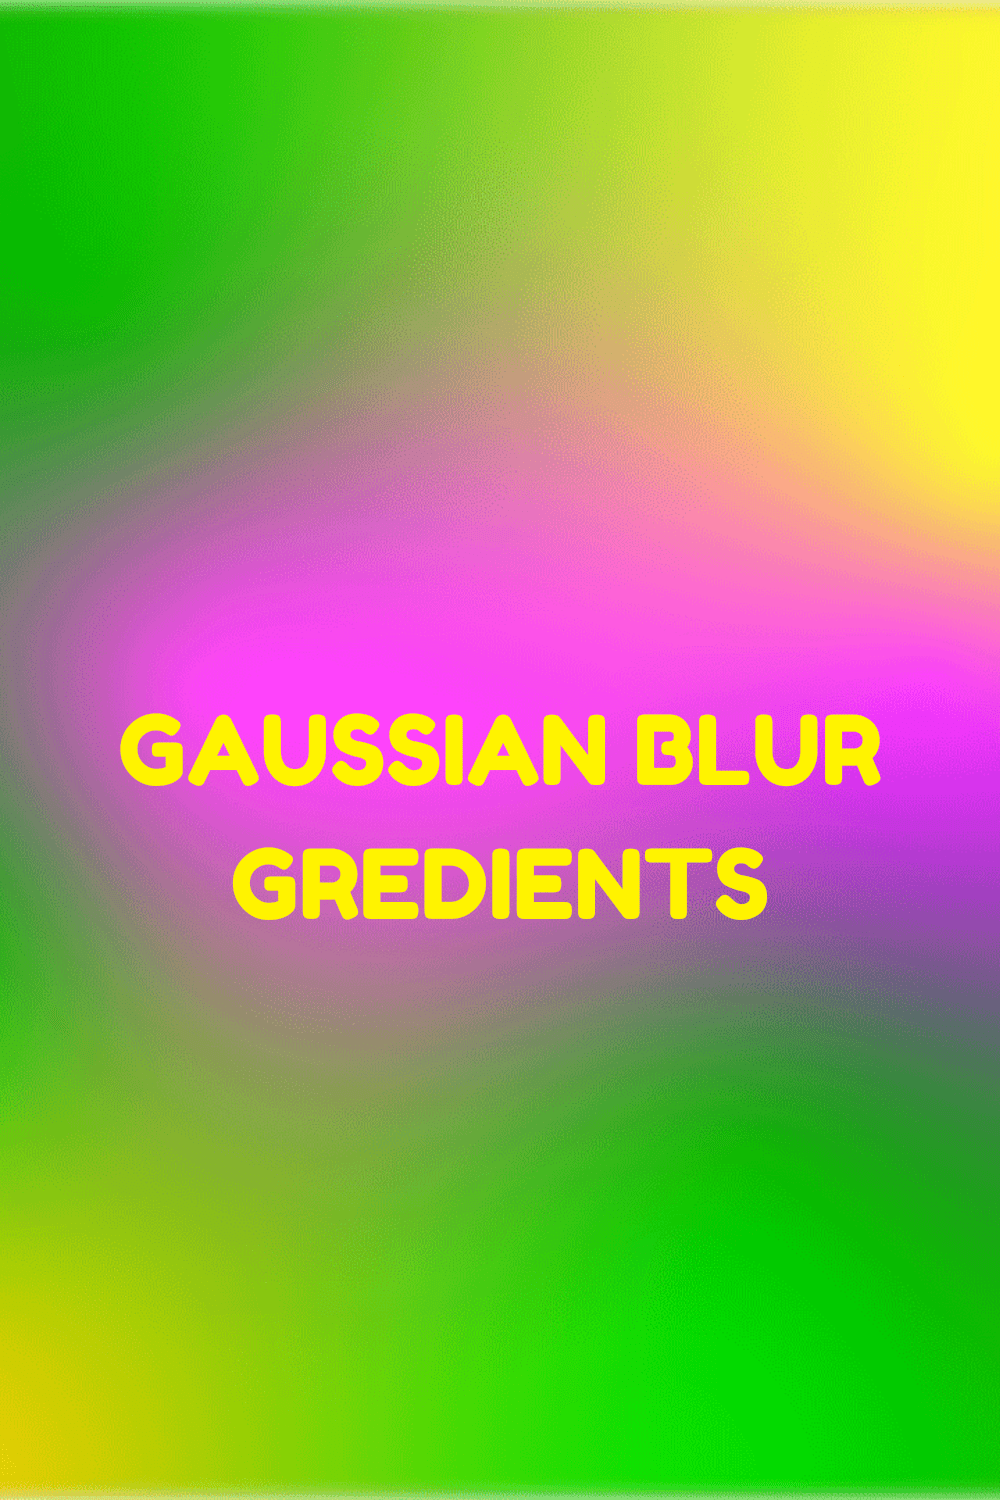 Gaussian Blur Gradient Backgrounds [ Bundle of 20 different colourful gradient designs ] pinterest preview image.